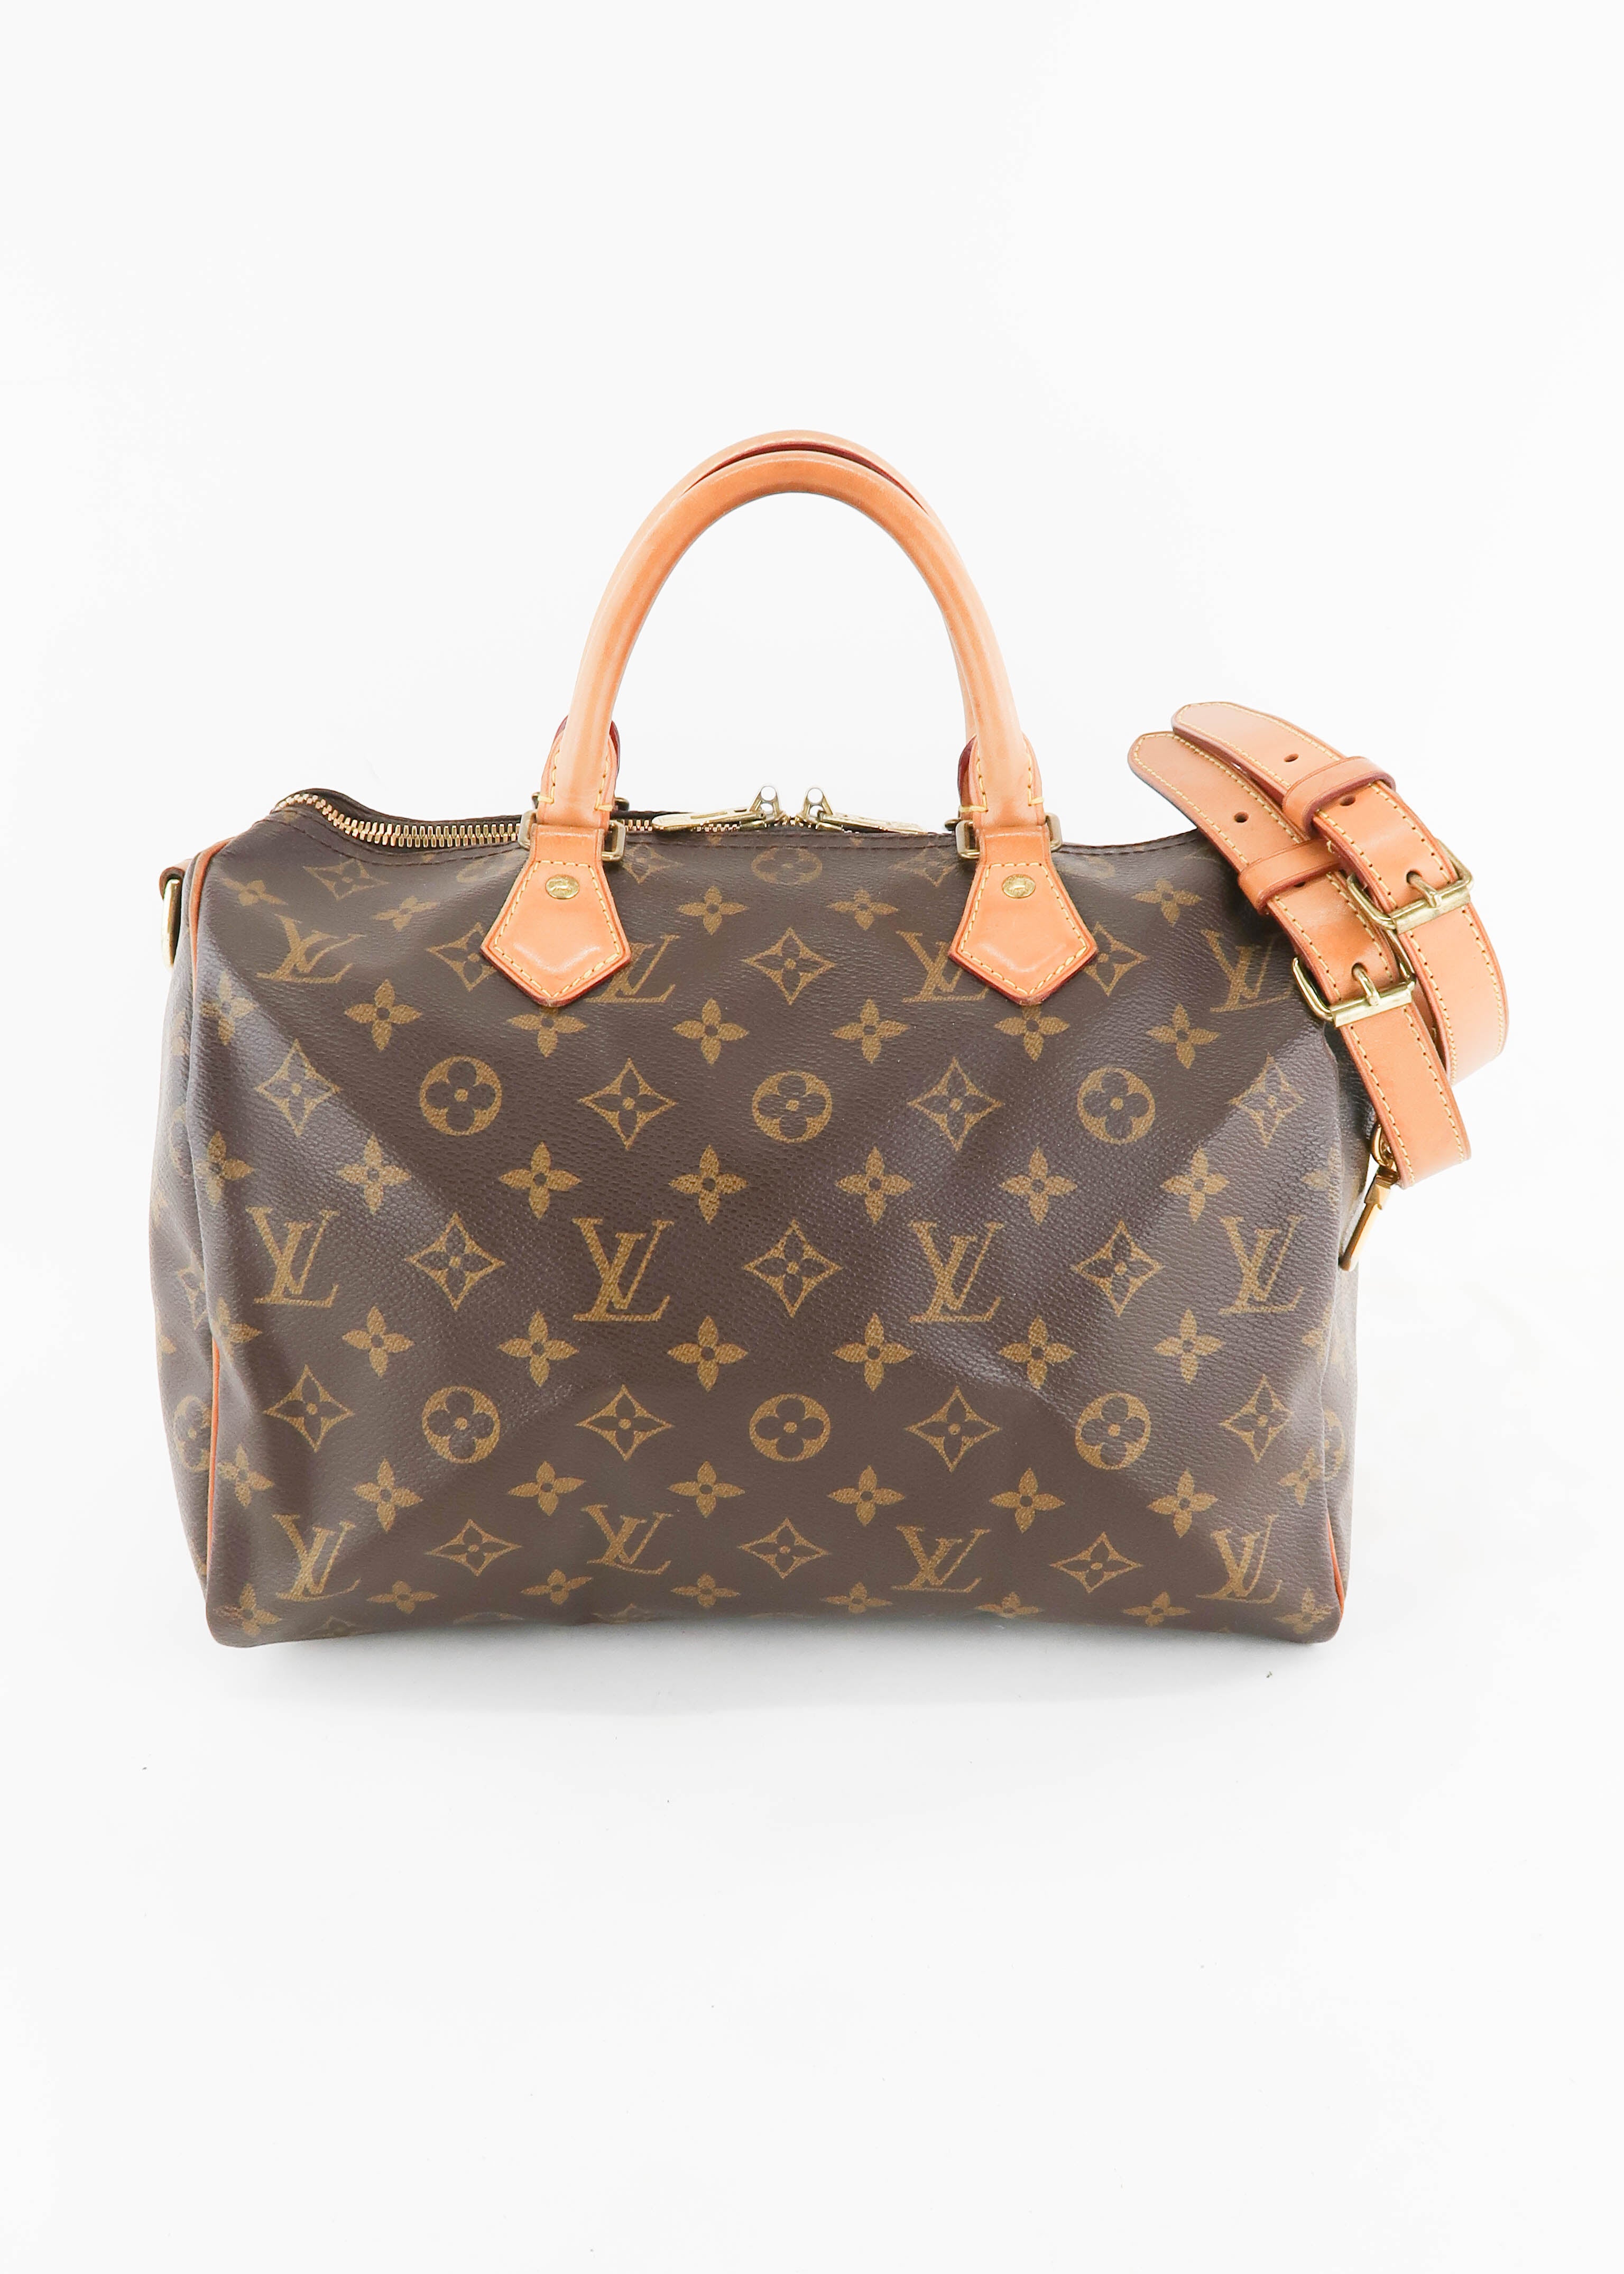 Authentic Louis Vuitton Speedy 30 Bandouliere Monogram Bag Purse With Adj.  Strap